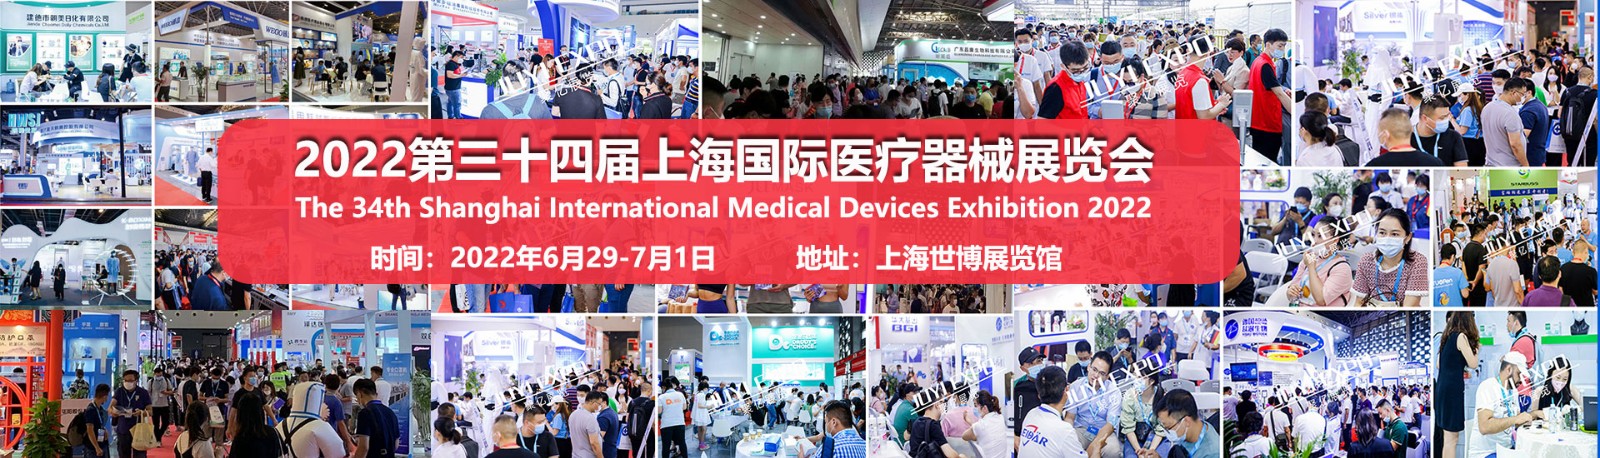 CMEH2022中国国际医疗器械展览会 -上海站、深圳站